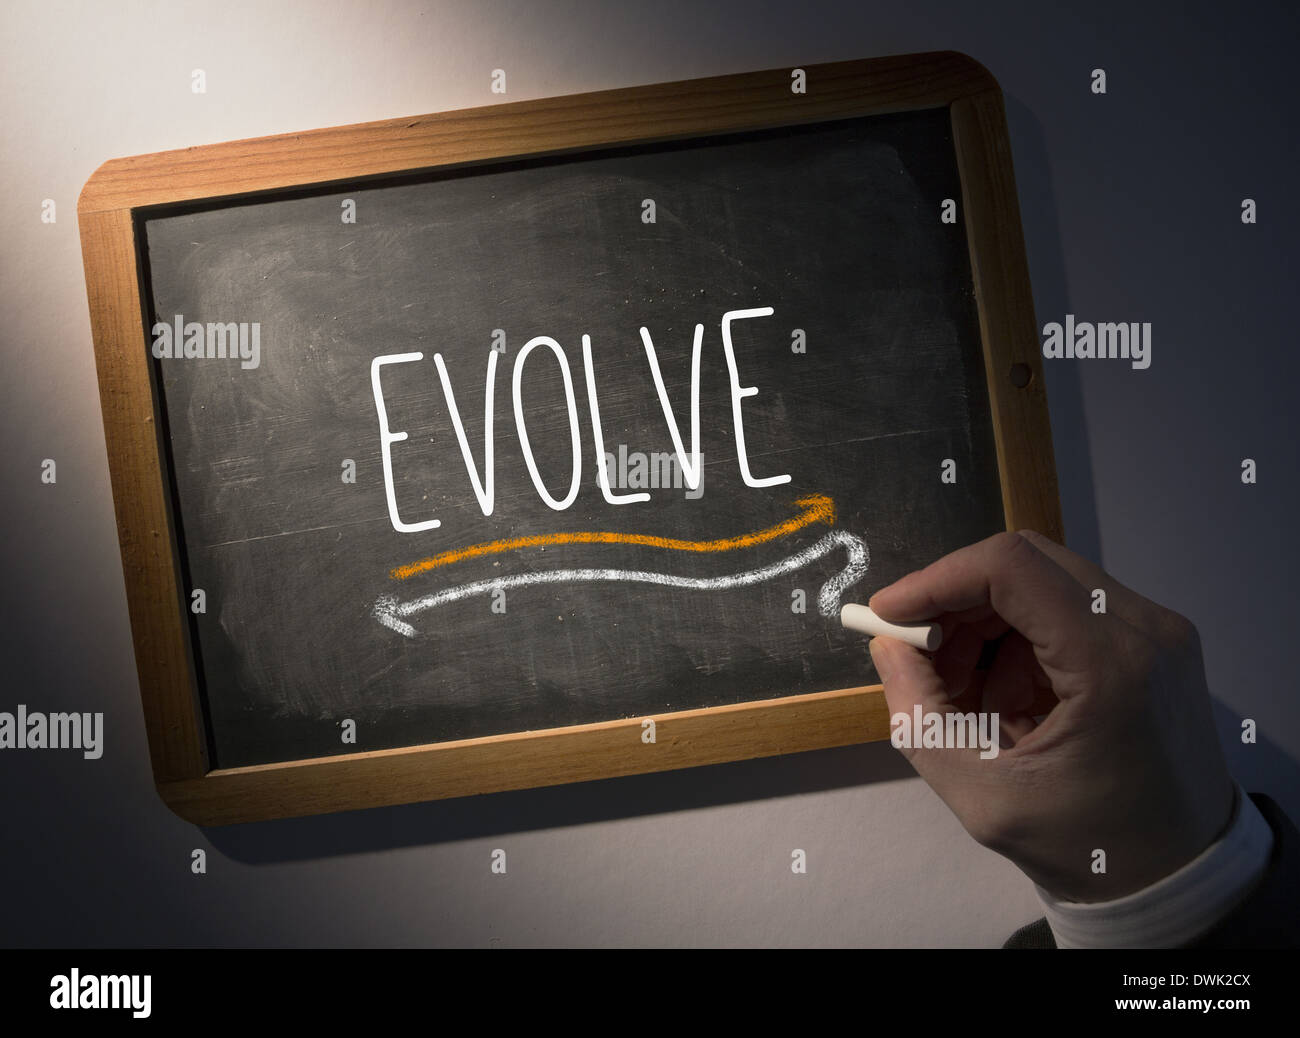 Hand writing Evolve on chalkboard Stock Photo